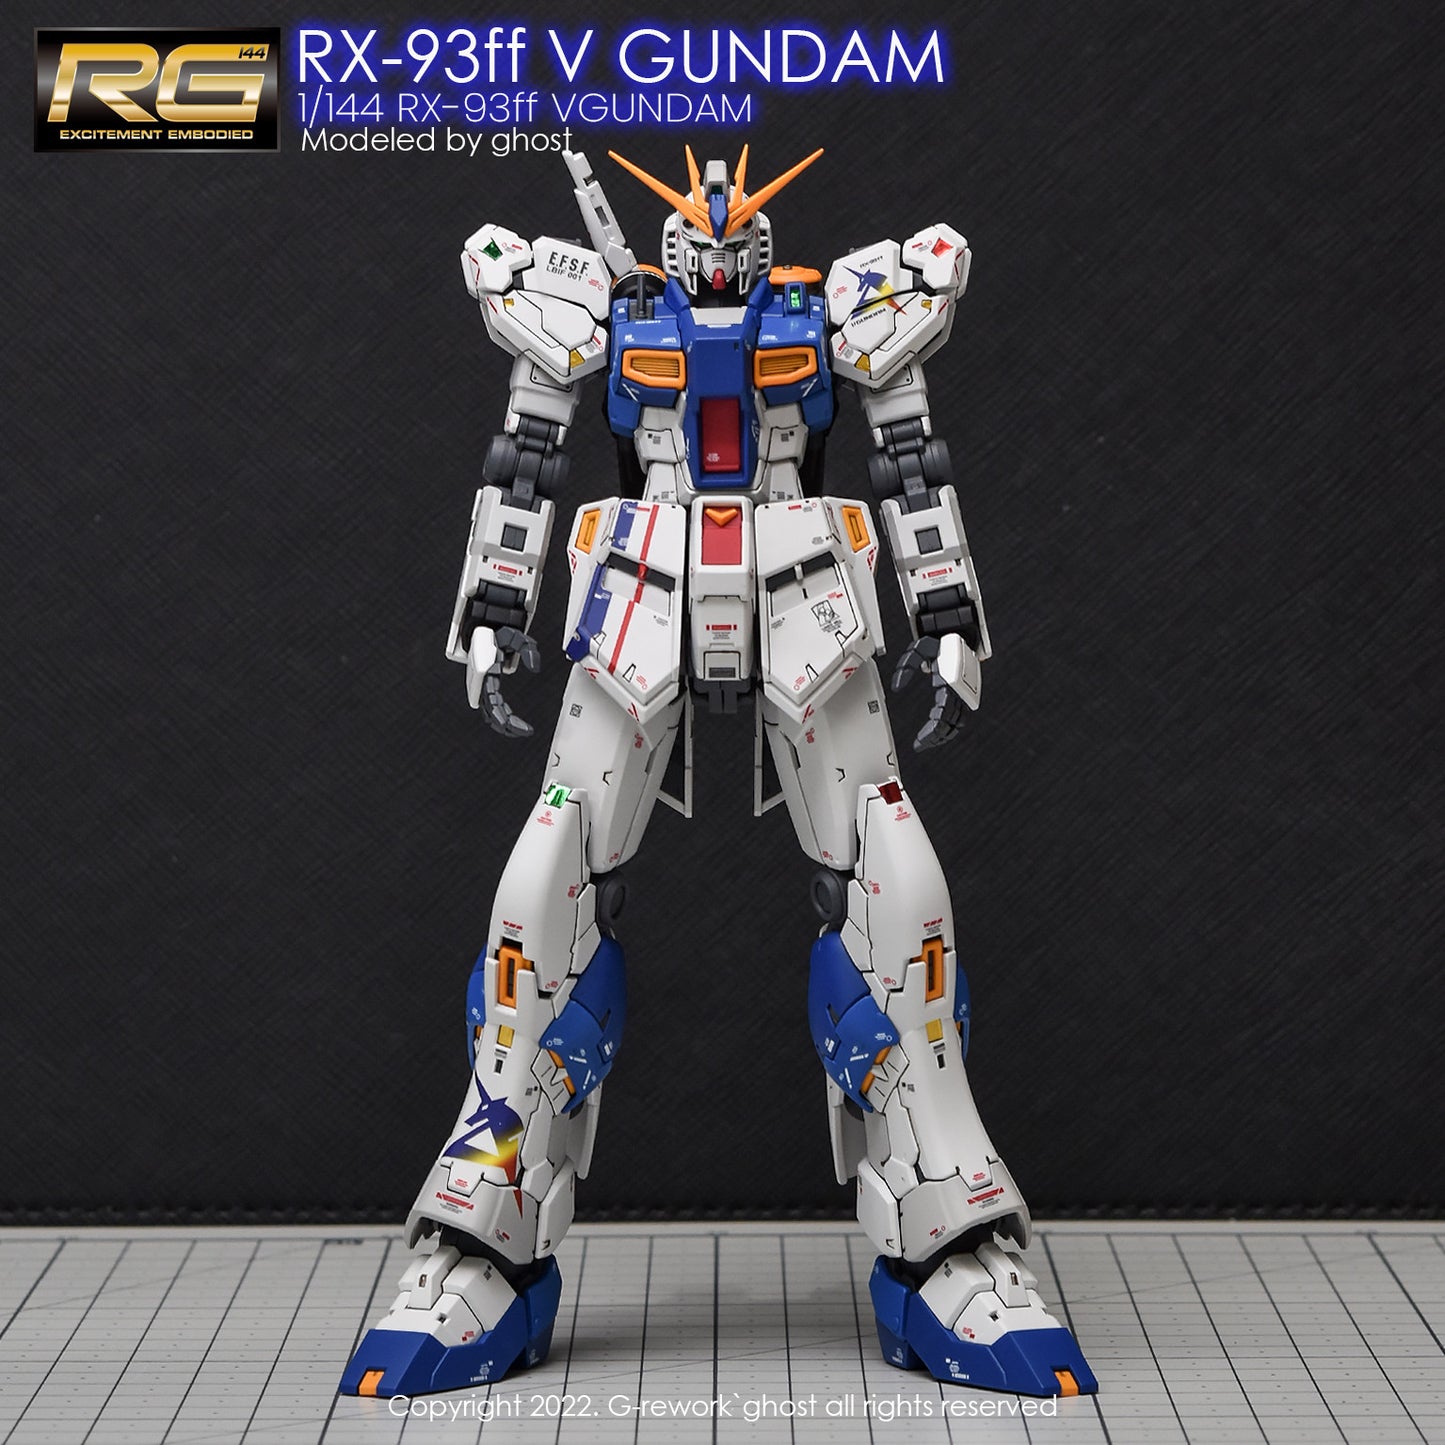 G-Rework [RG] RX-93FF Nu Gundam (water slide decal)